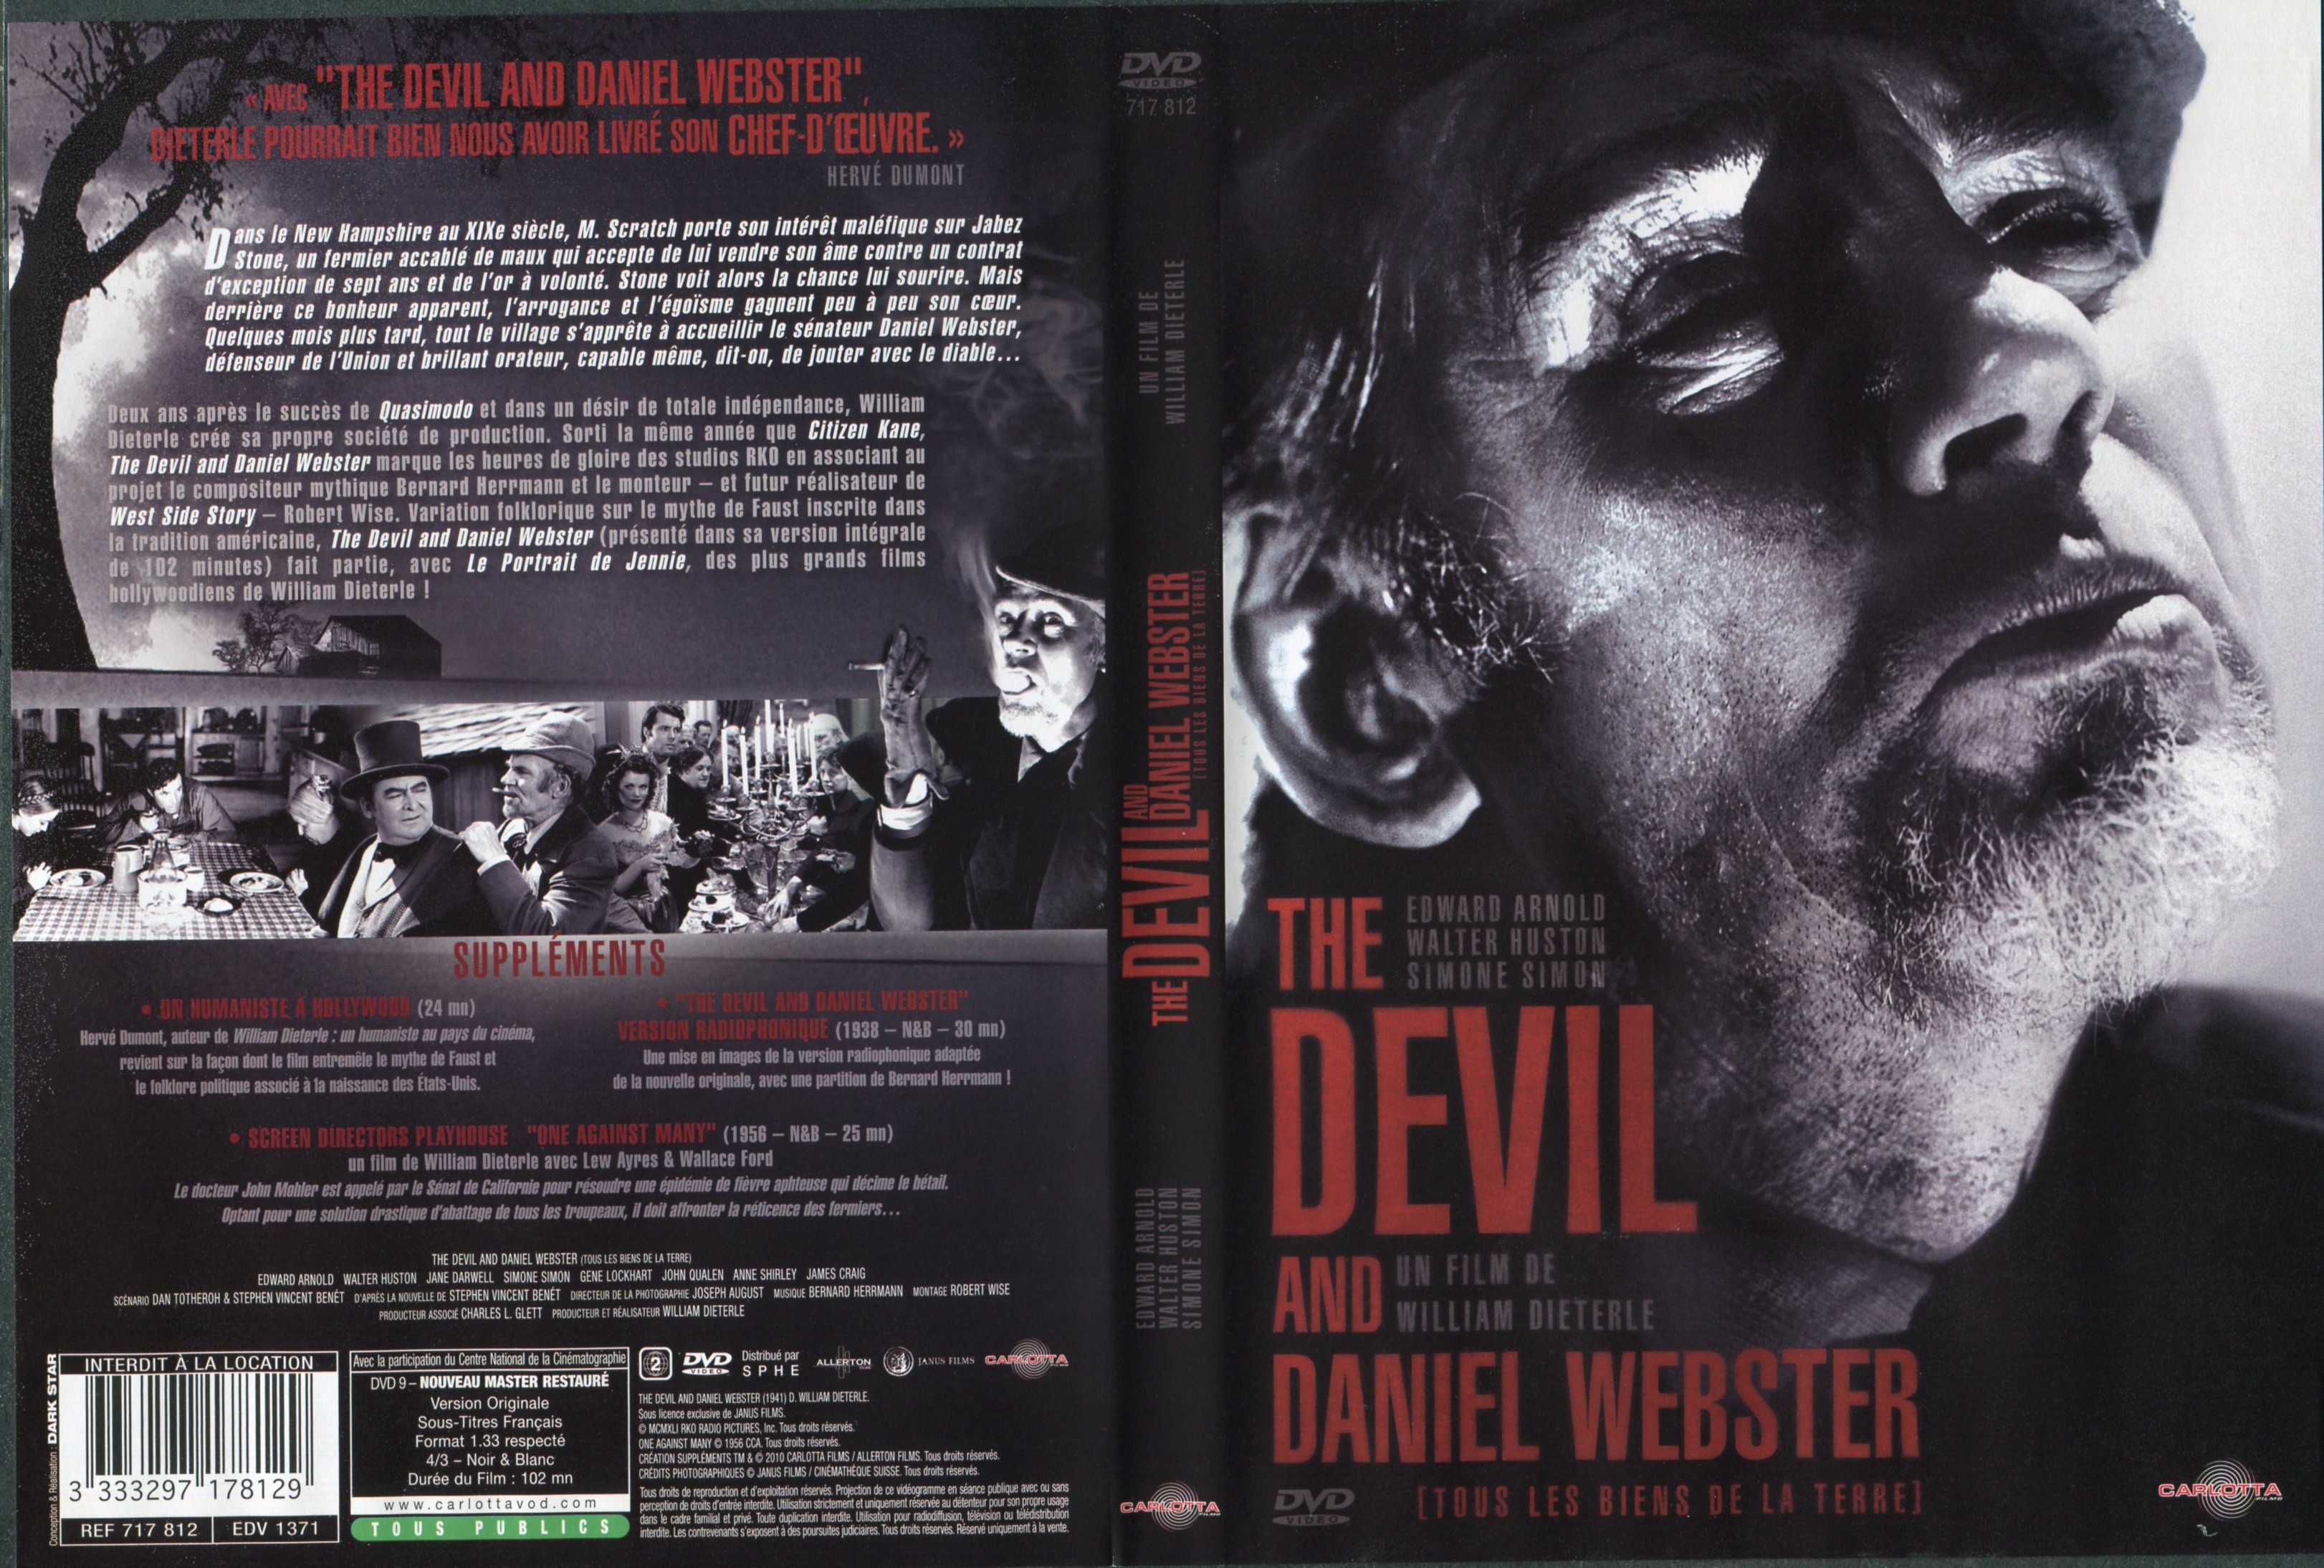 Jaquette DVD The devil and Daniel Webster